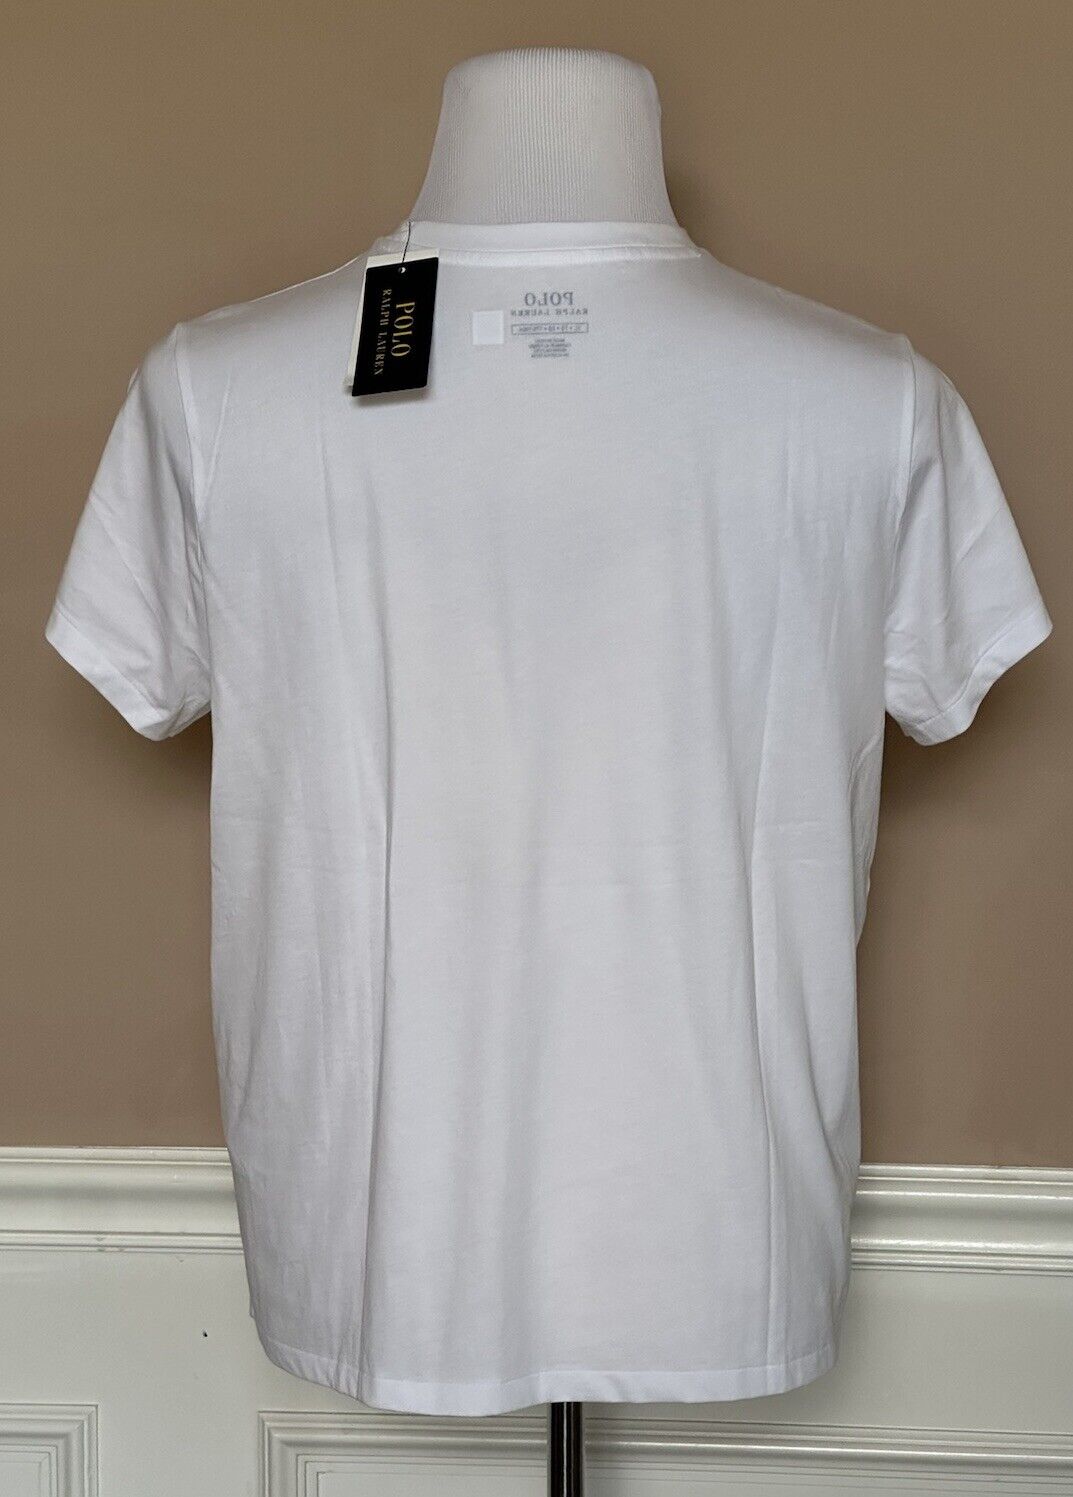 Neu mit Etikett: 78 $ Polo Ralph Lauren USA Flag Weißes Kurzarm-T-Shirt-Oberteil Medium